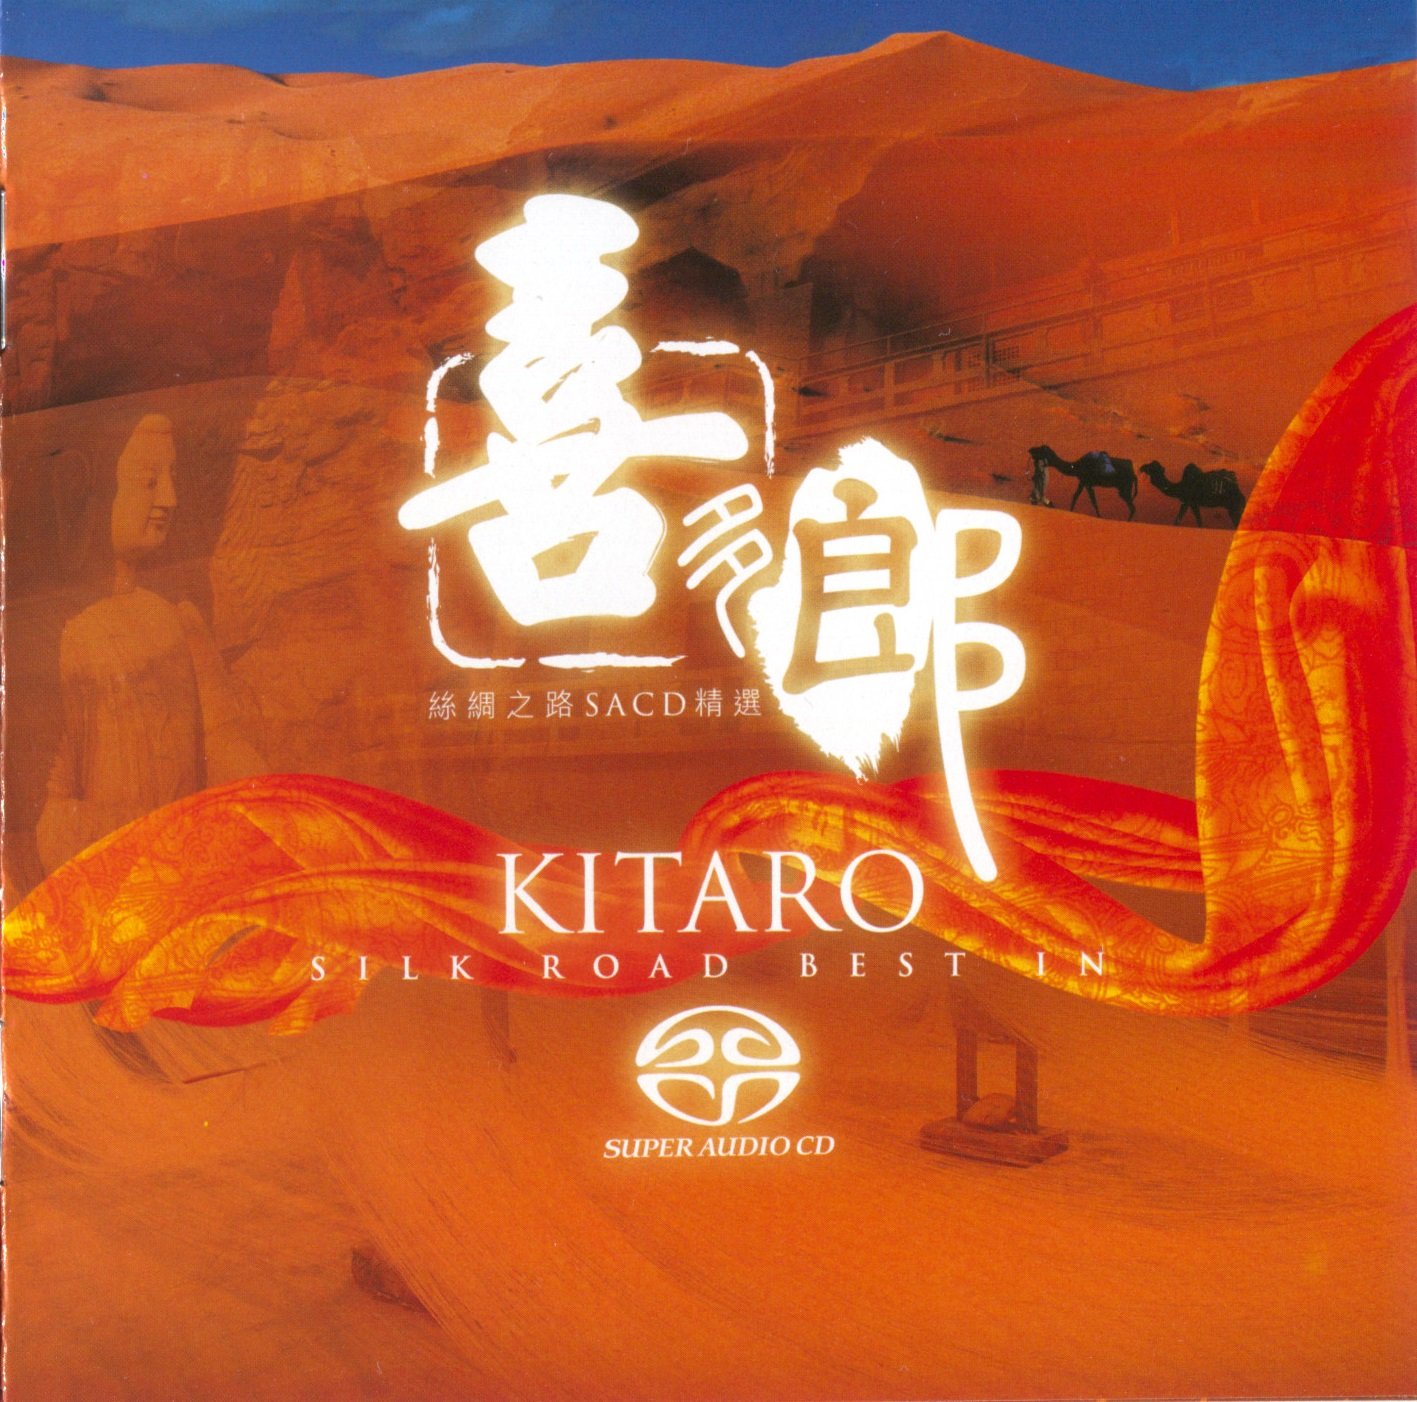 Silk Road Best In Sacd Kitaro Lastfm